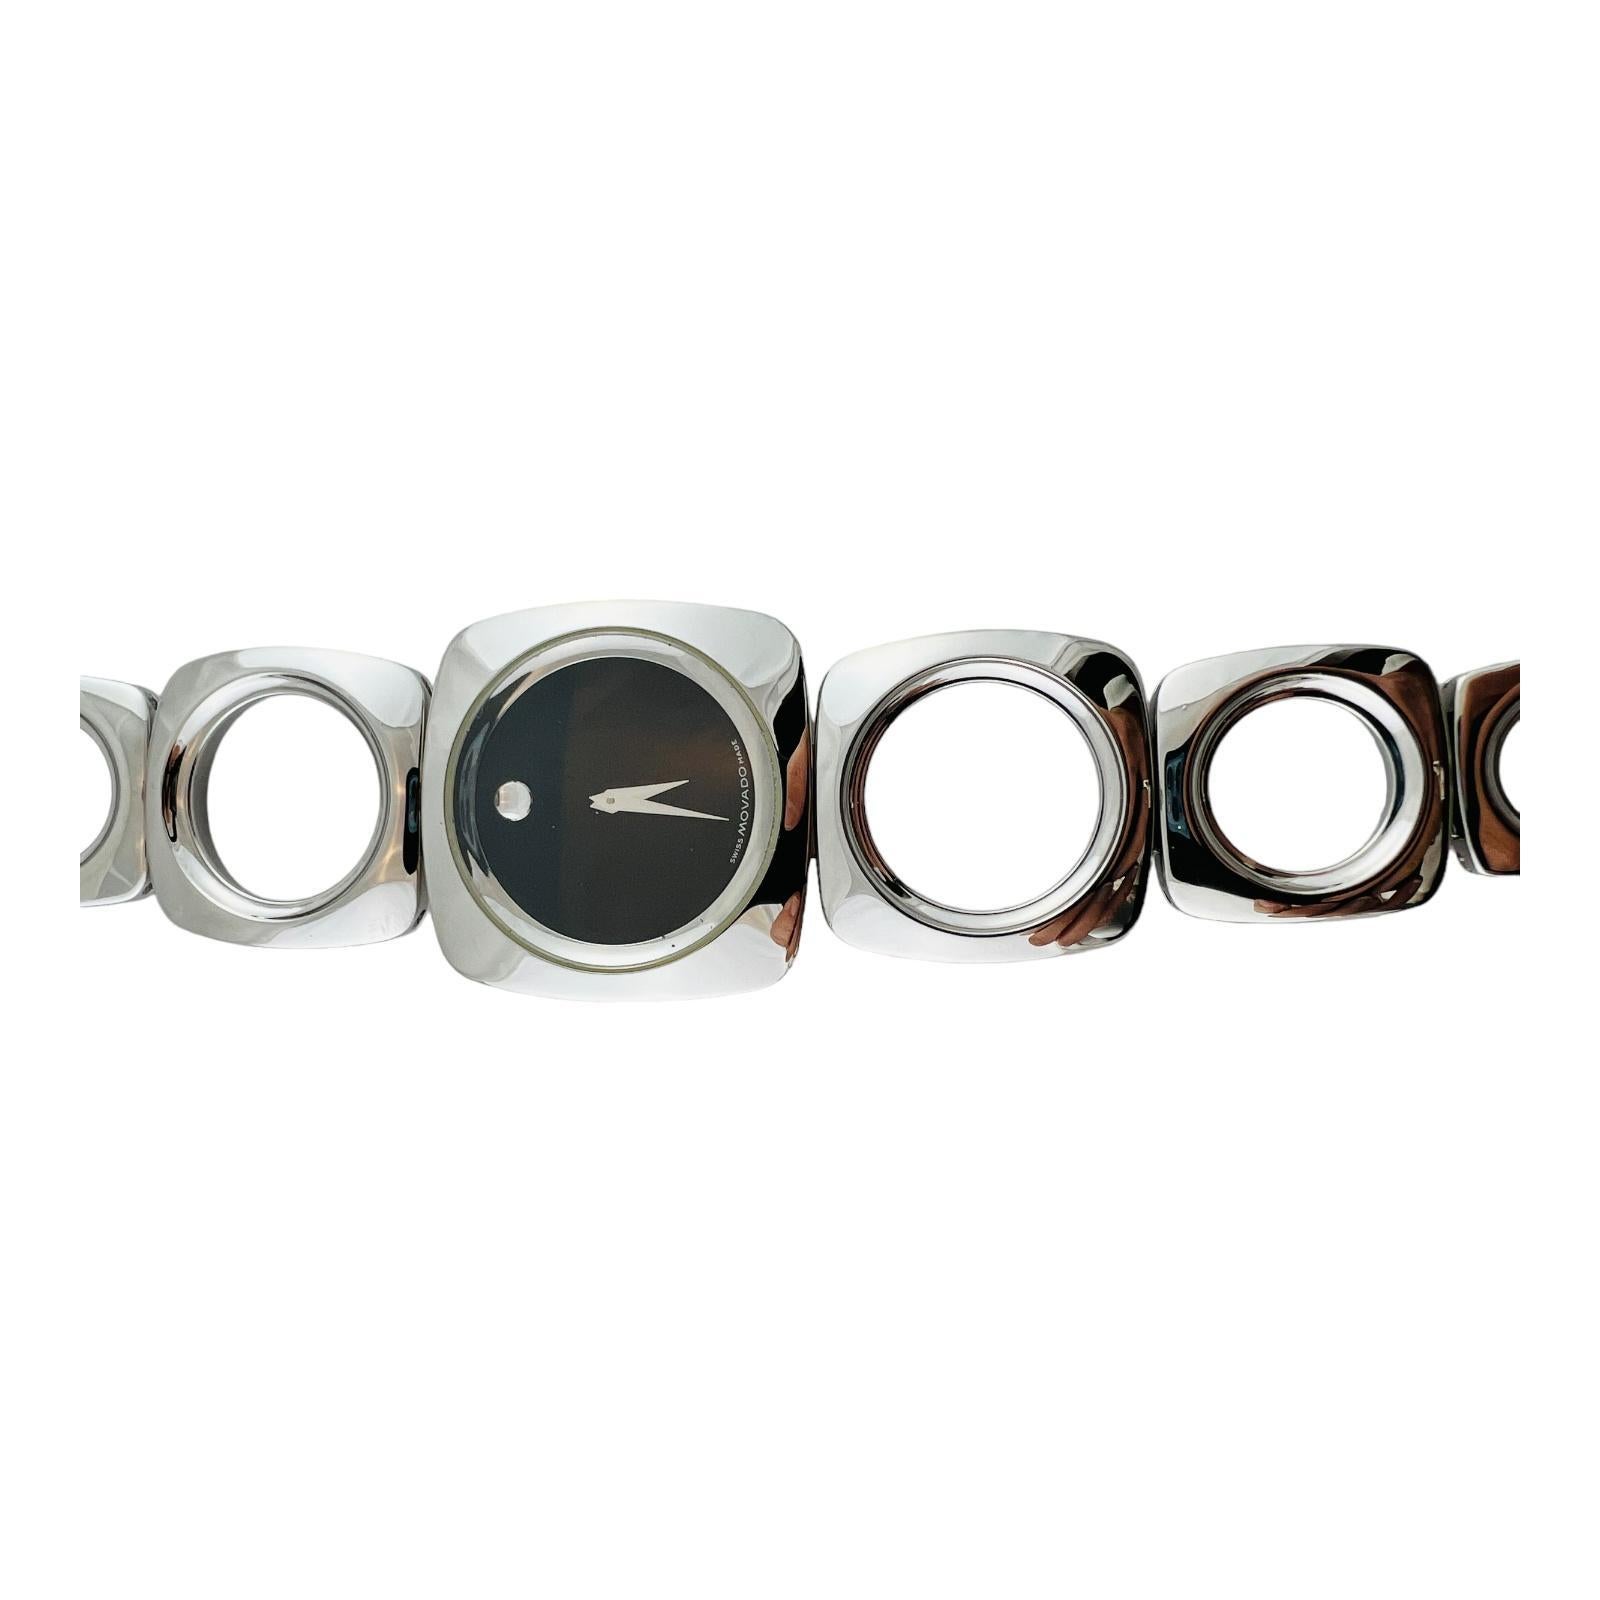 Movado Dolce Ladies Bracelet Watch 84 G2 1330 box #15796 For Sale 2